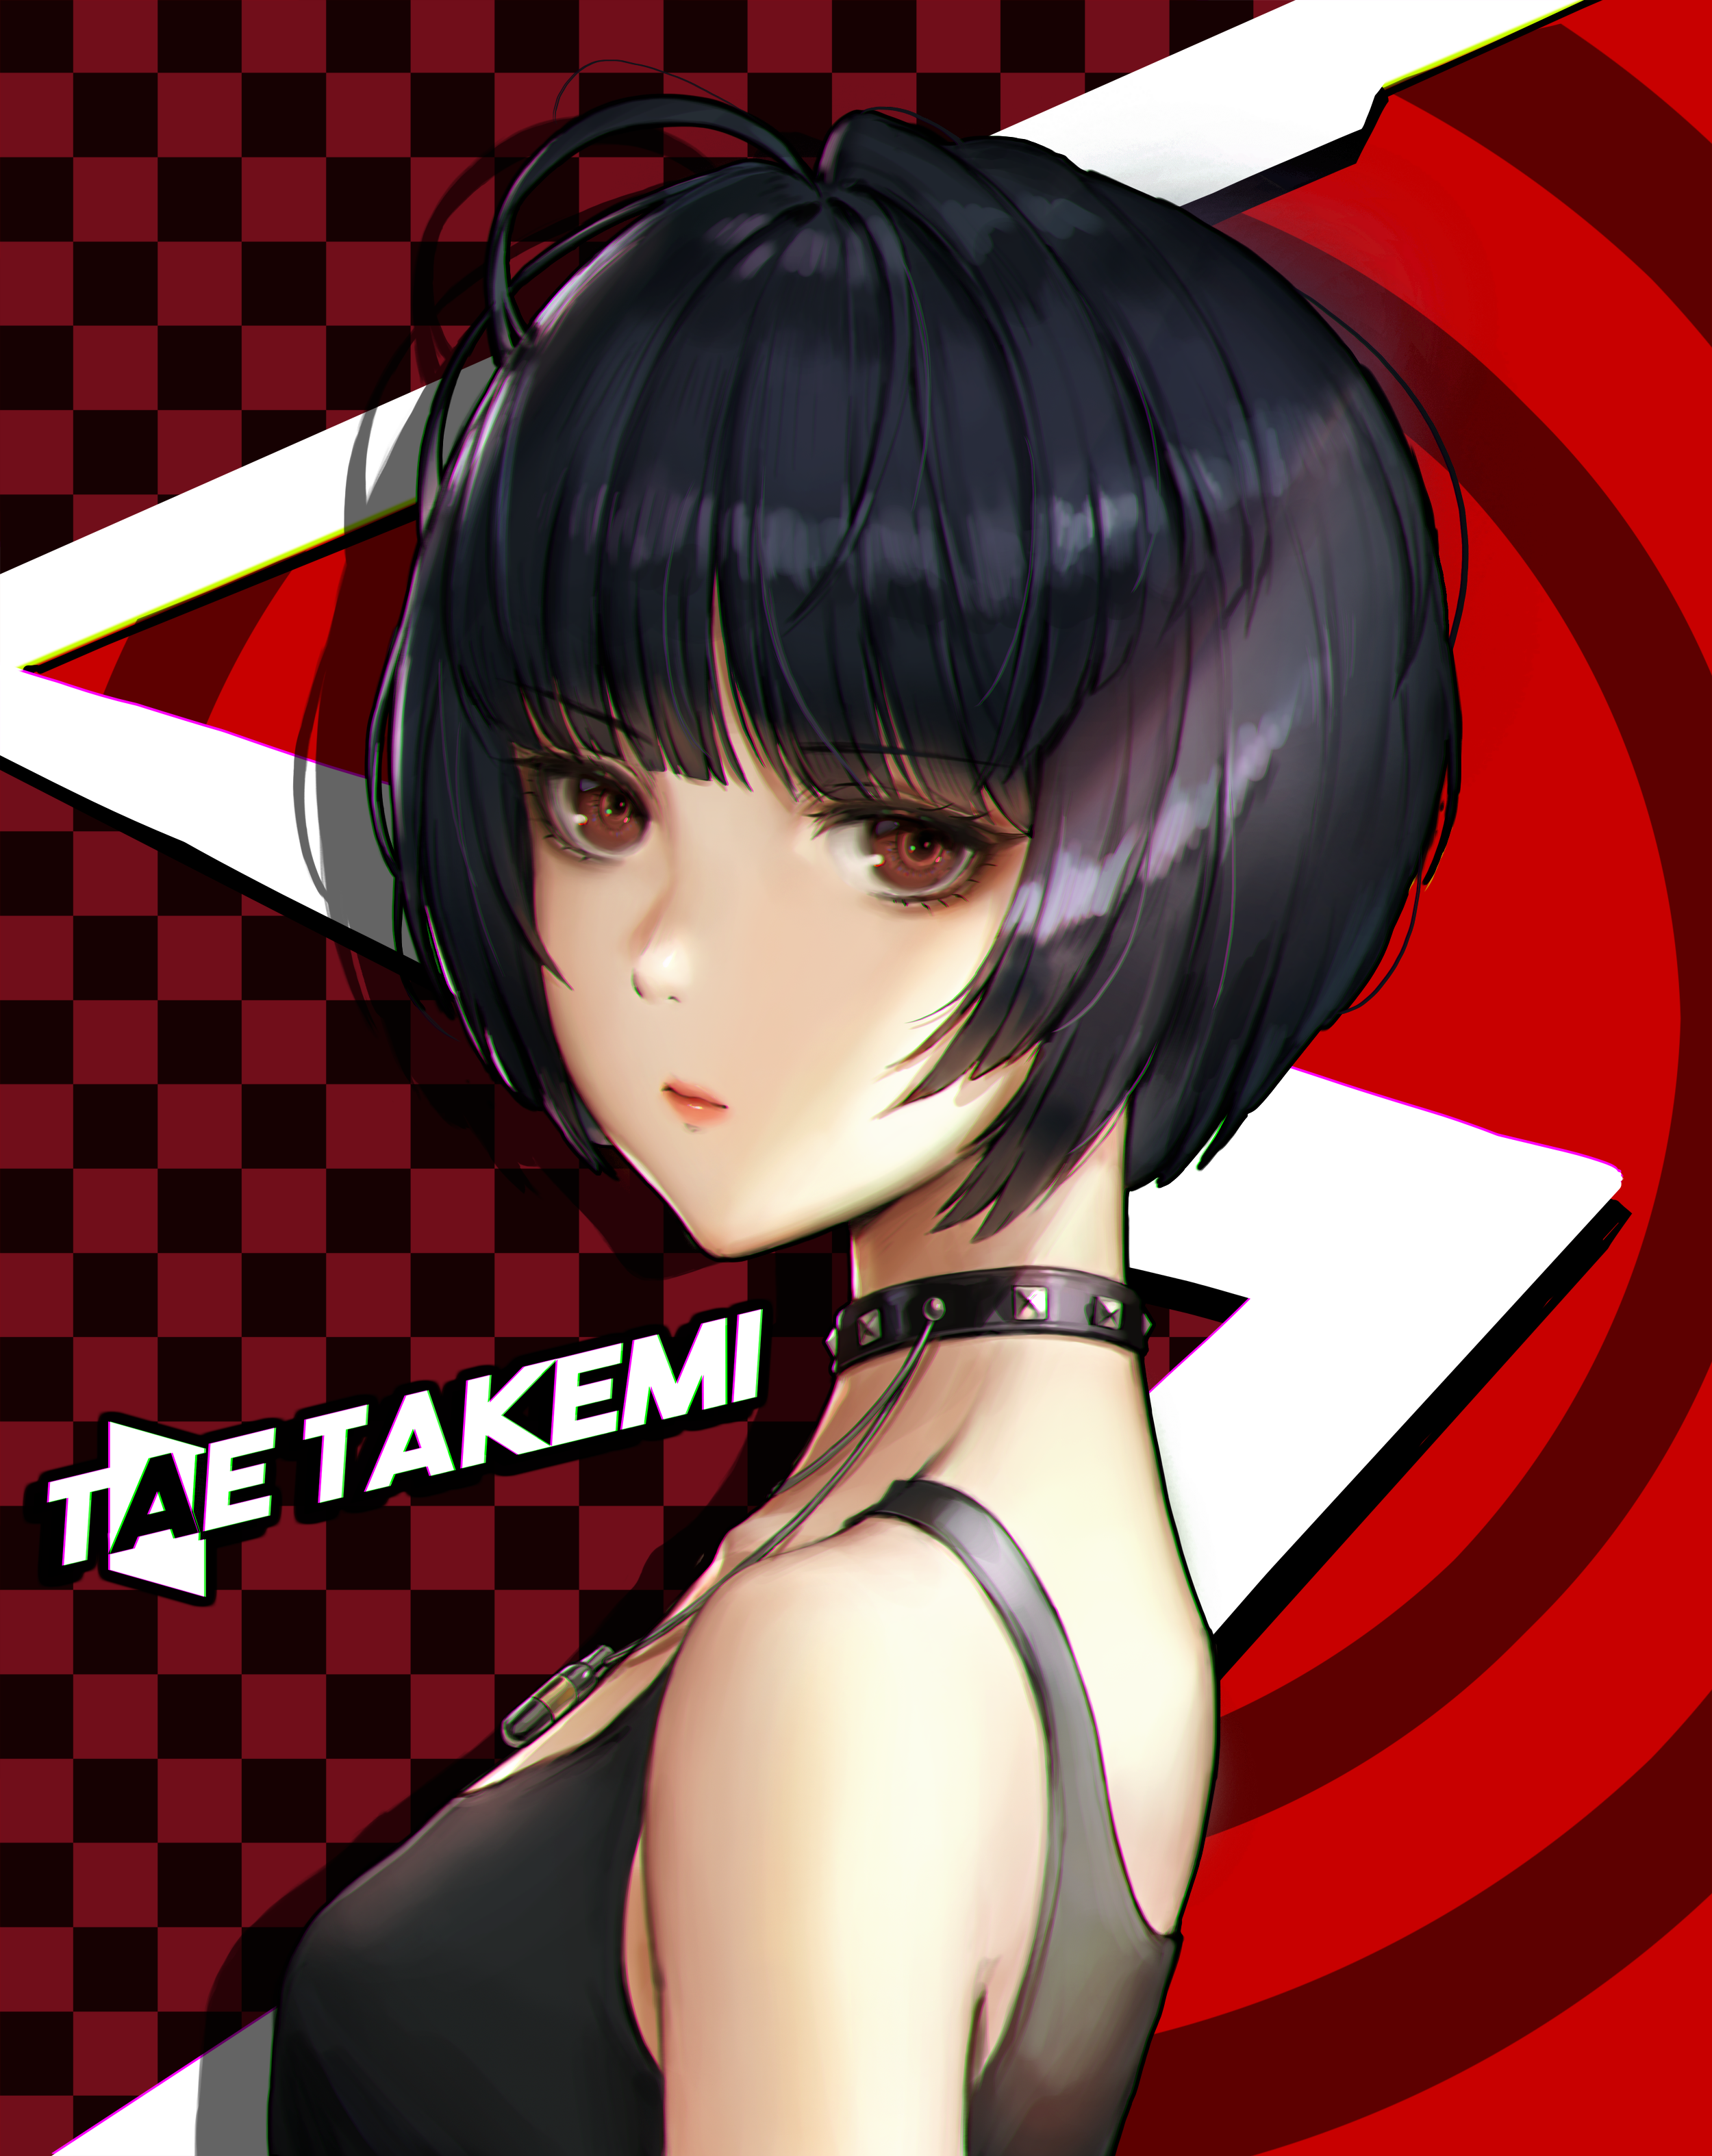 Takemi Tae Megami Tensei: PERSONA 5 Anime Image Board